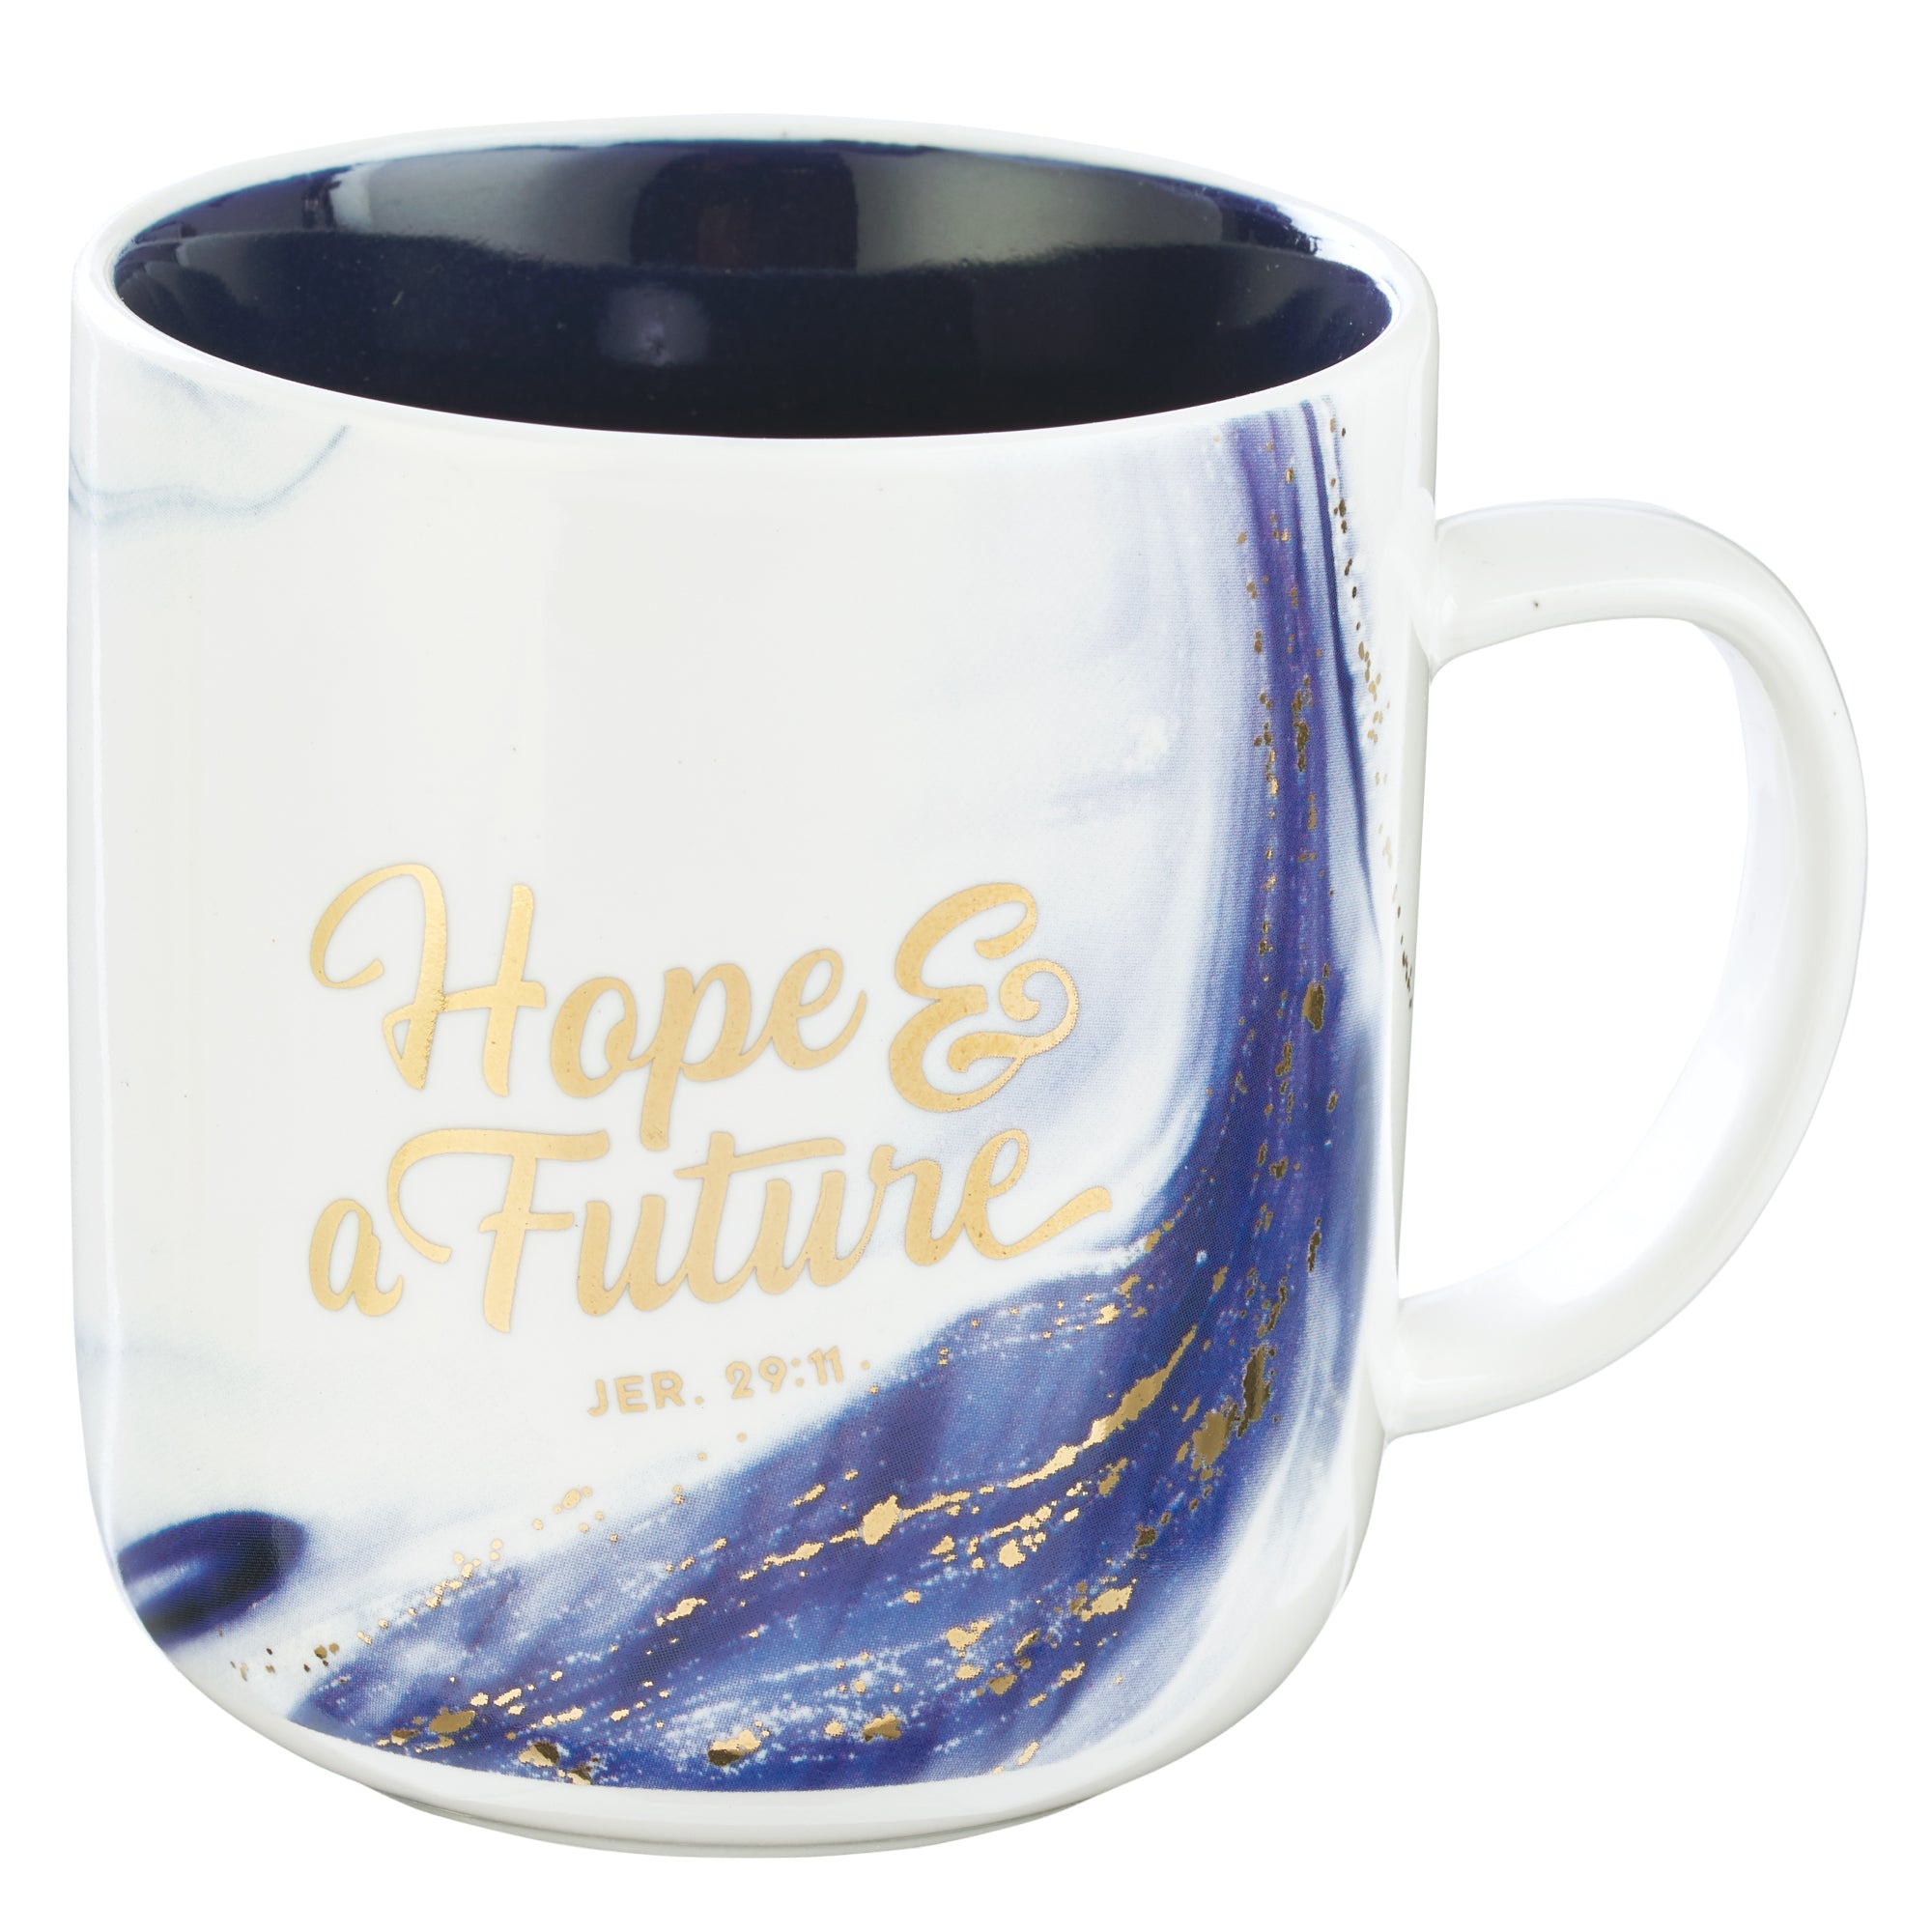 Image of Blue Hope & a Future Coffee Mug - Jeremiah 29:11 other